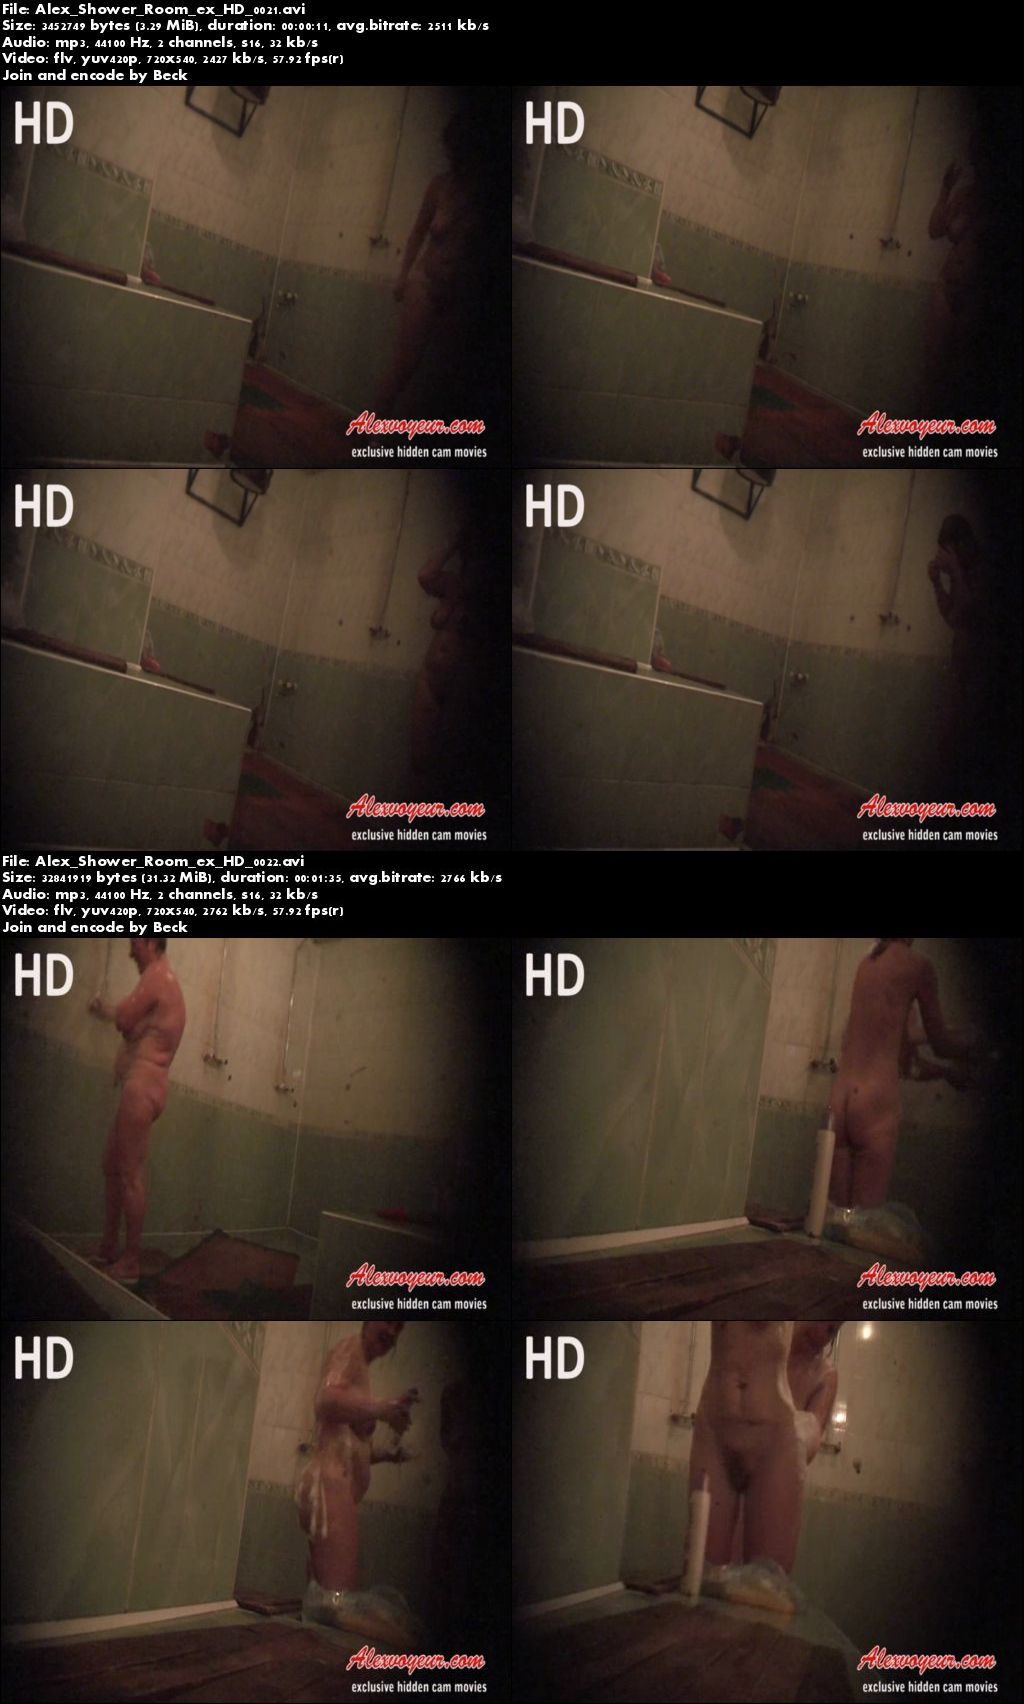 Alex Shower Room ex HD 011